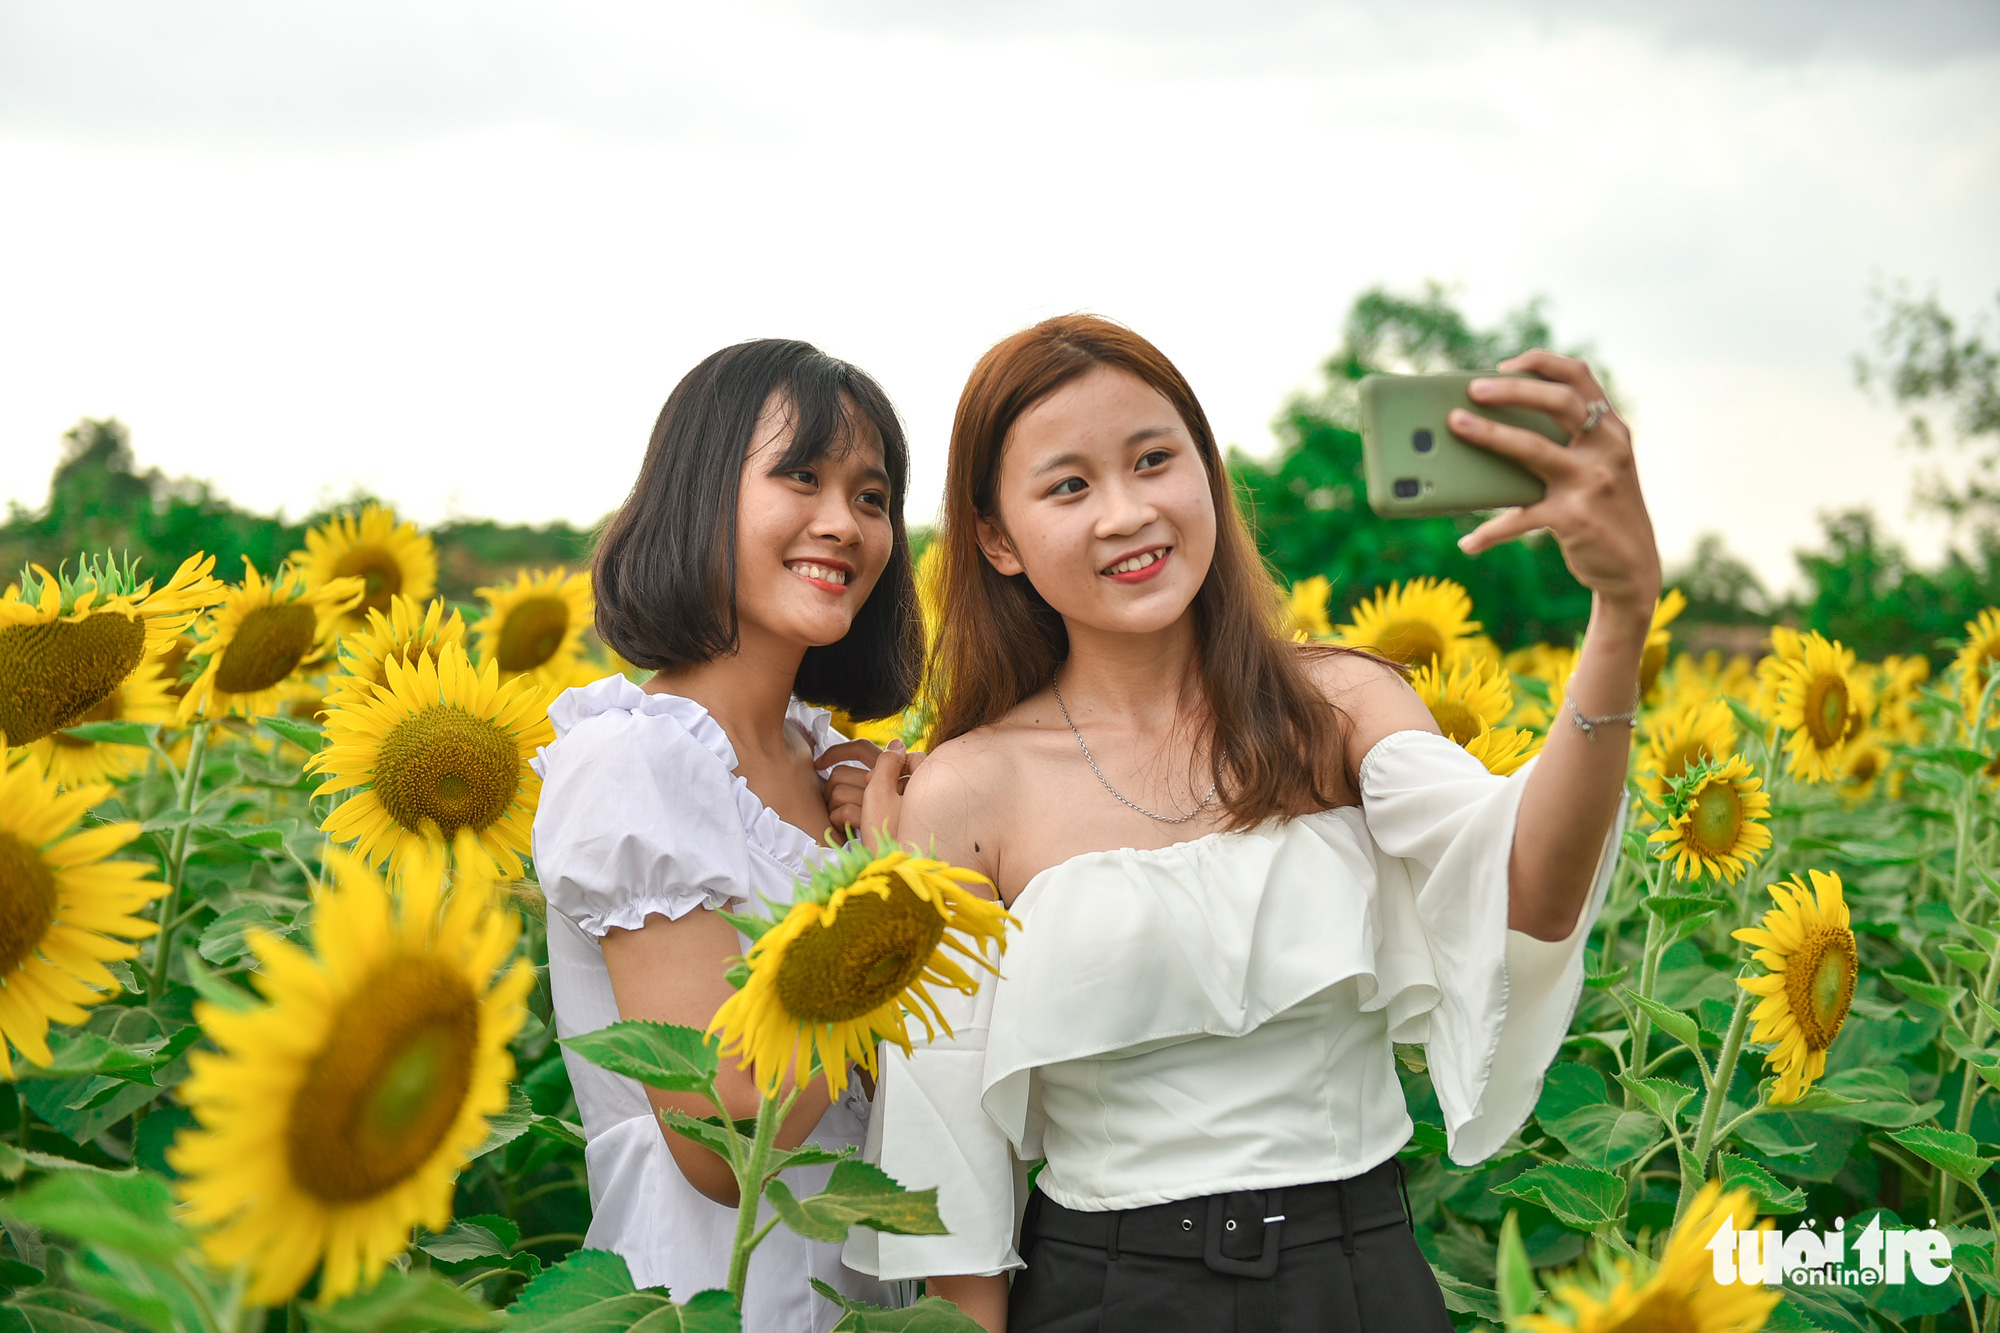 Dazzling sunflower garden draws photo seekers on Saigon outskirts